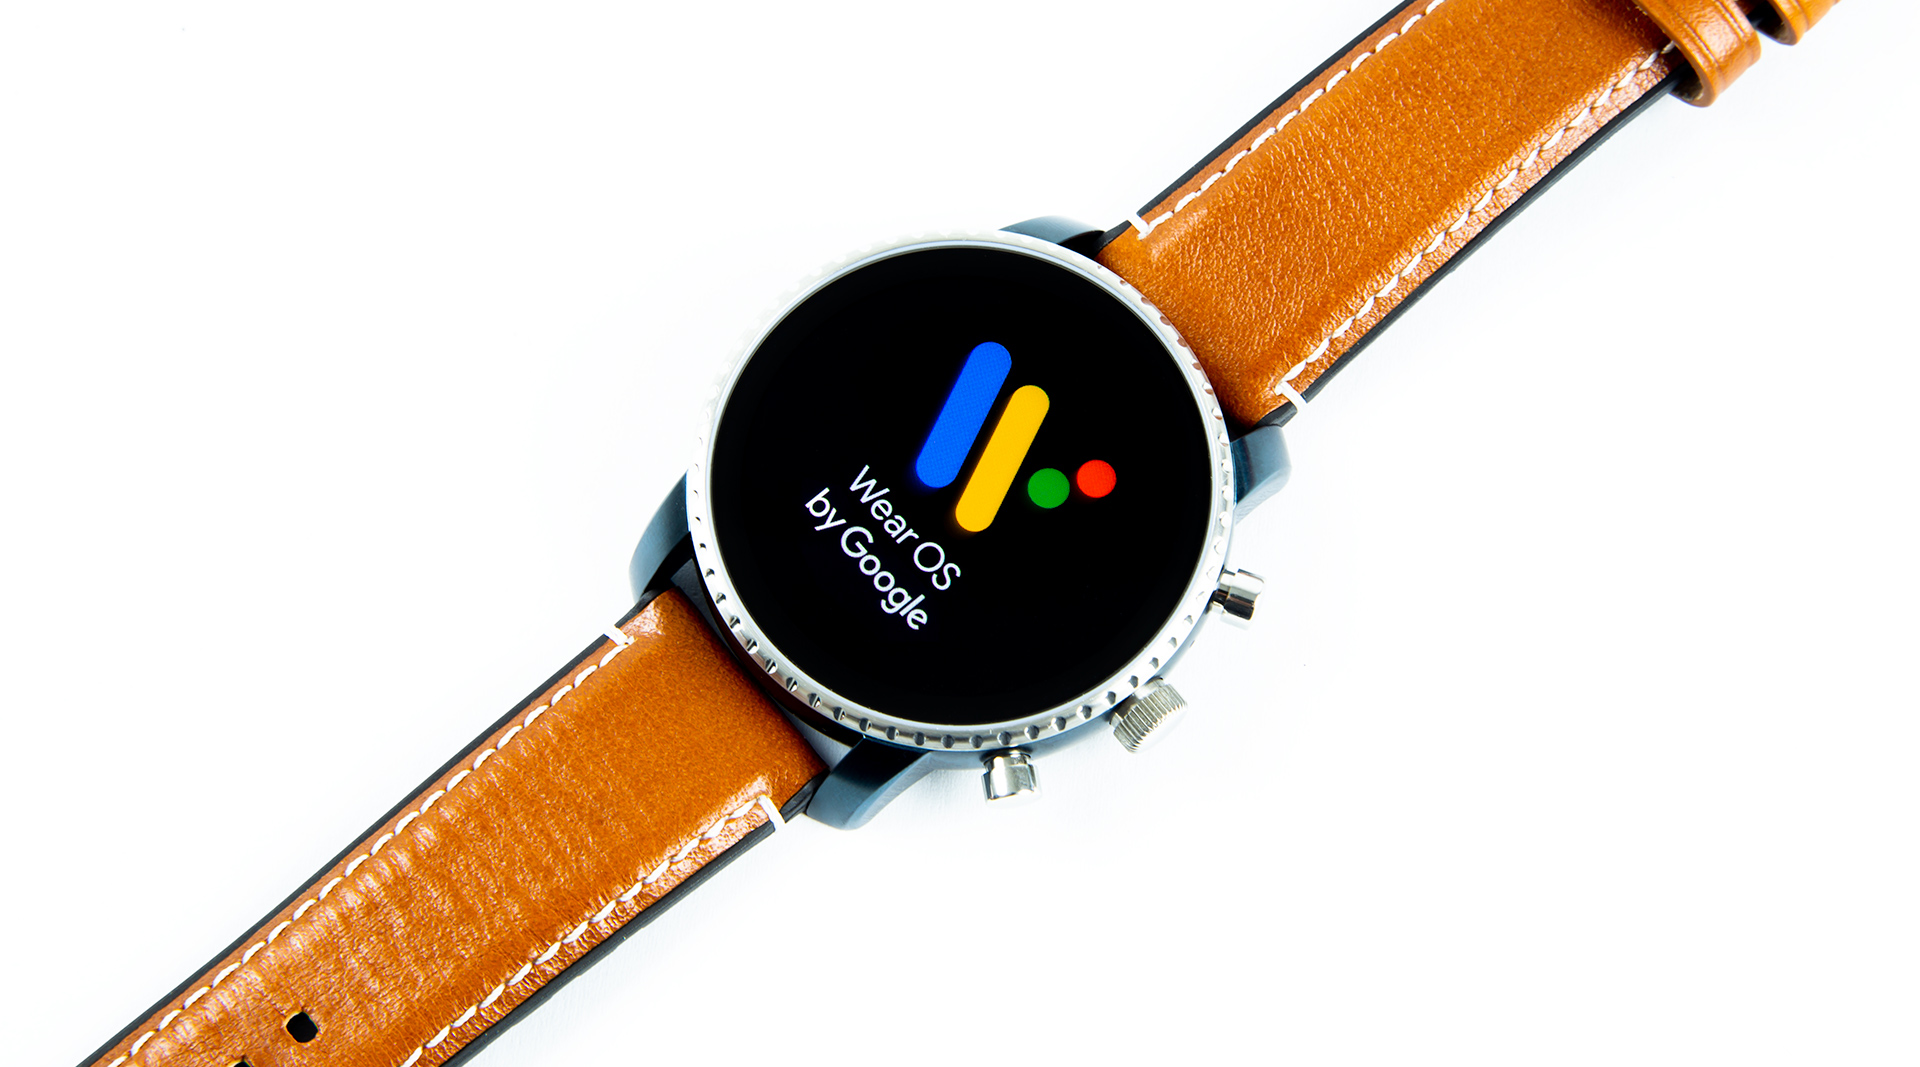 google smartwatch fossil